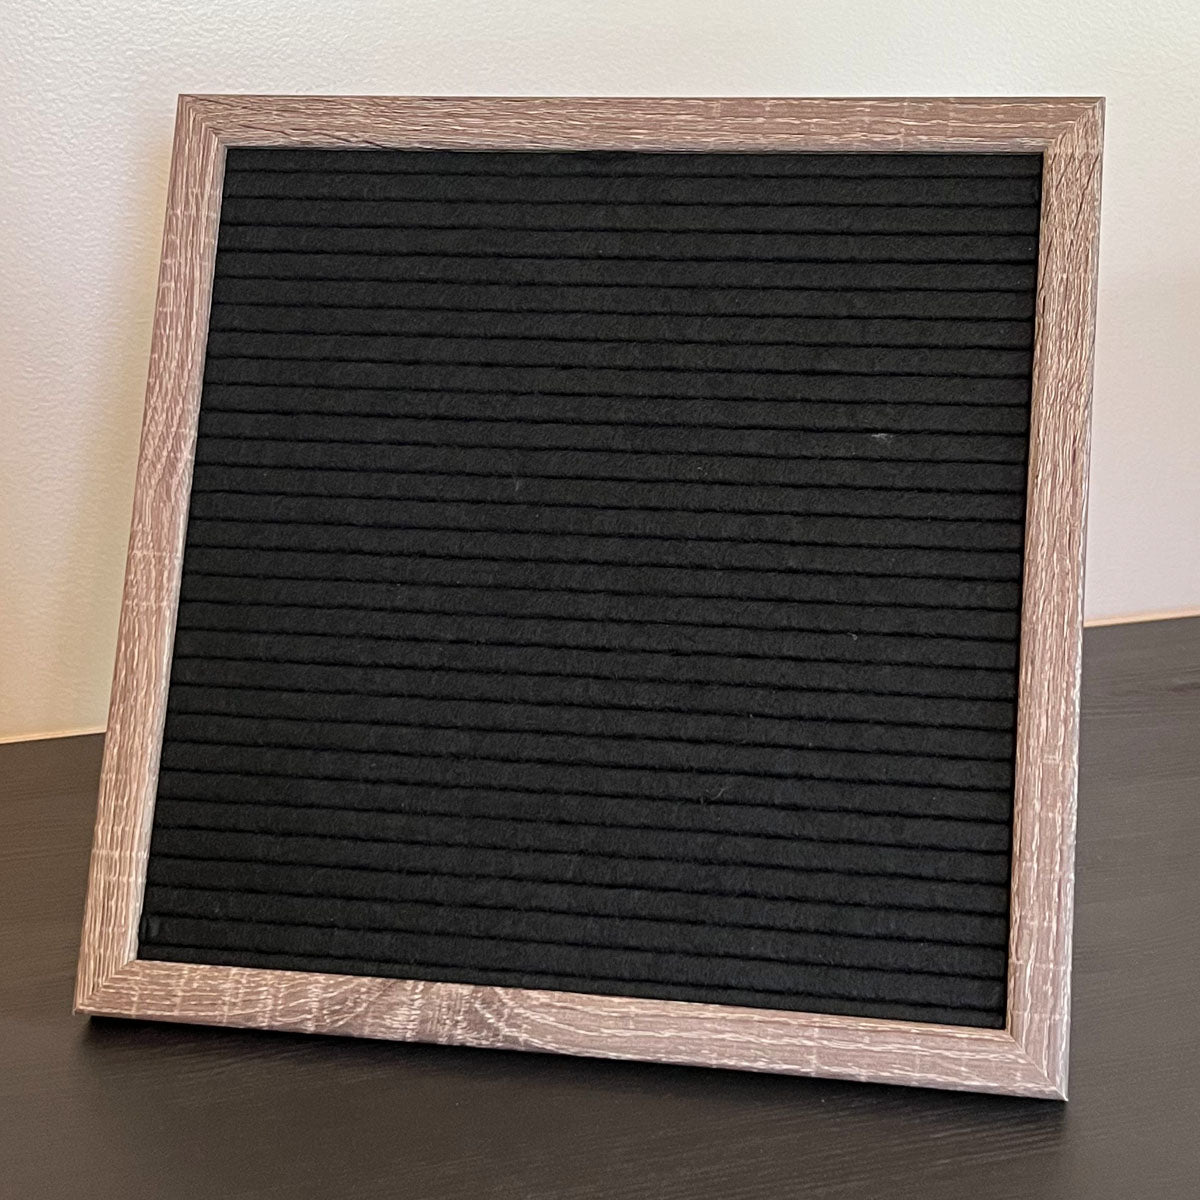 12"x12" Black Felt Letter Board with Wood Frame